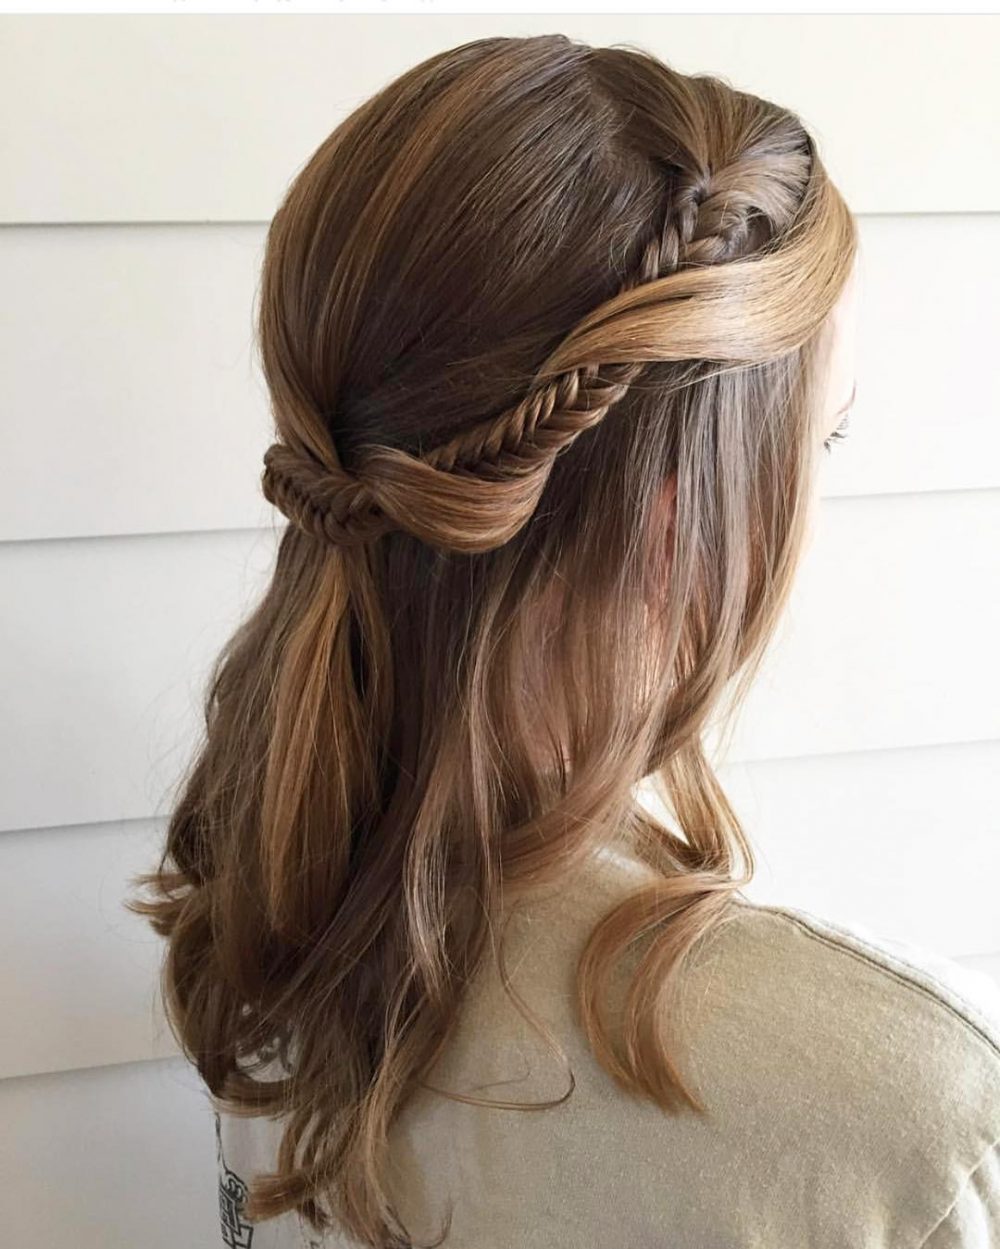 Fishtail Twist hairstyle